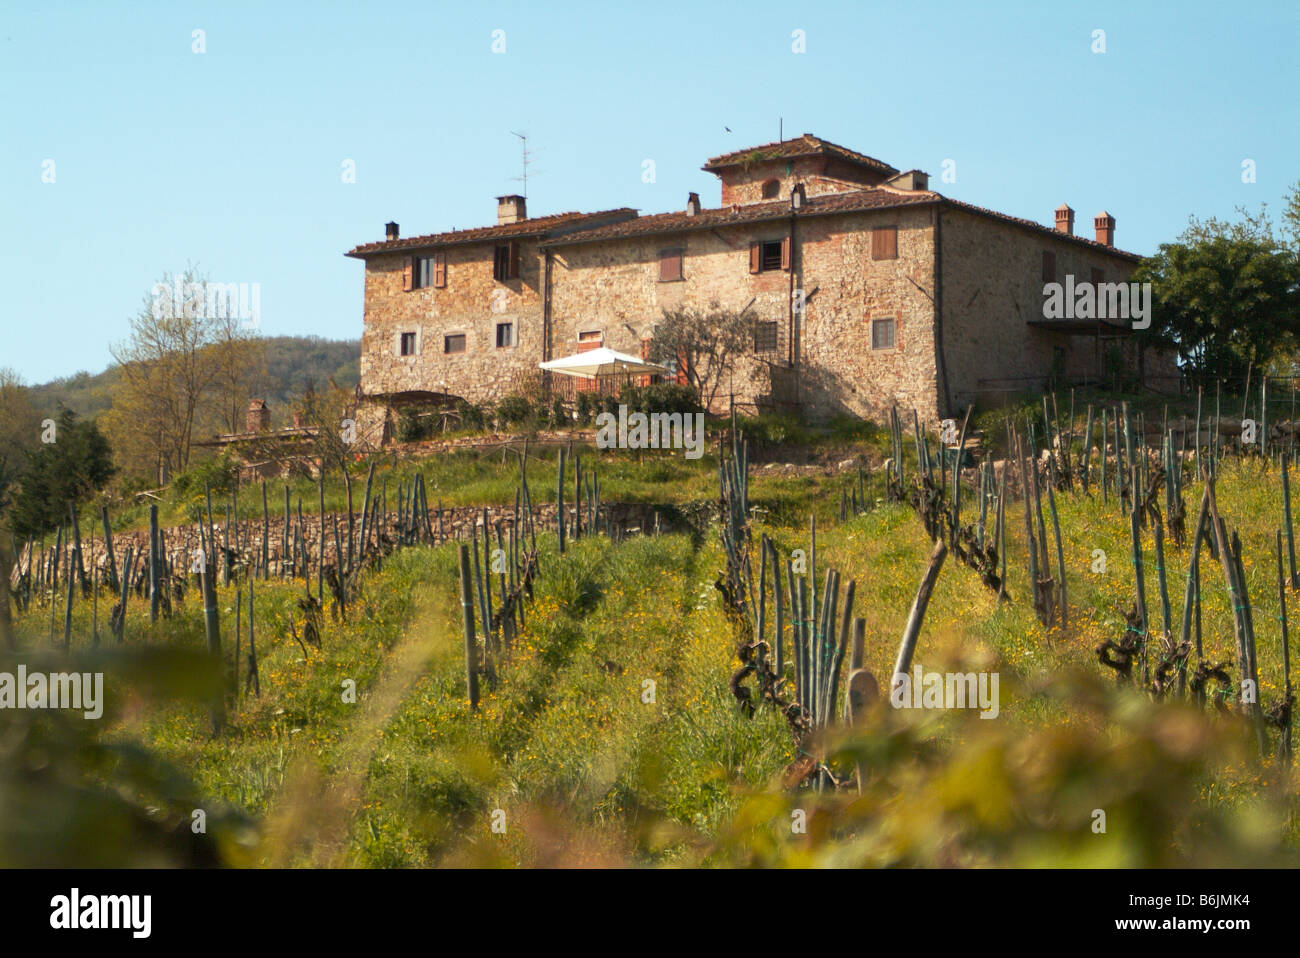 Italien, Toskana, Greve, Poggio Asciutto, einem Bauernhof Bed &amp;  Breakfast Bauernhof Stockfotografie - Alamy